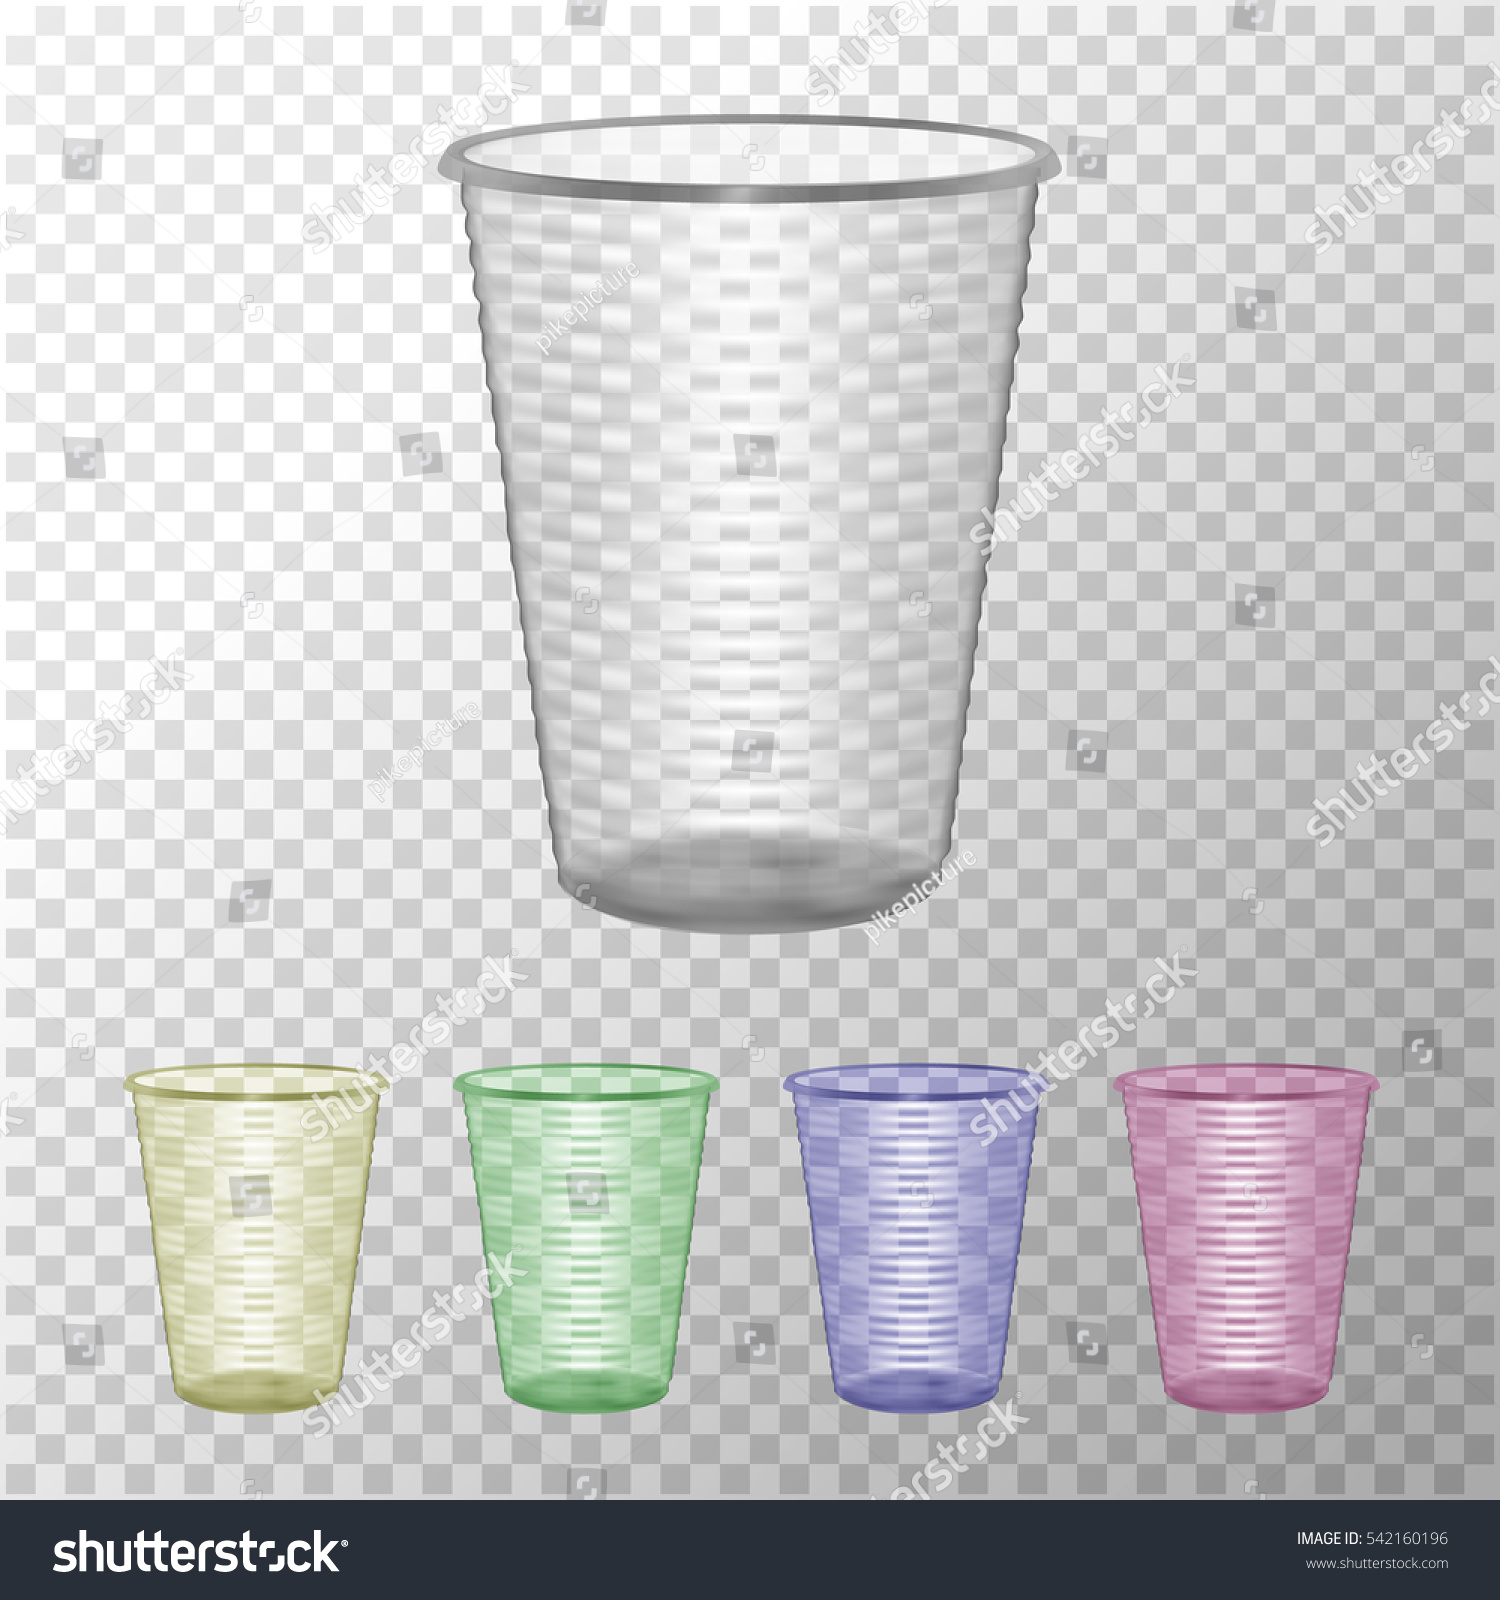 Download Transparent Plastic Cup Set Mock Your Stock Vector ...